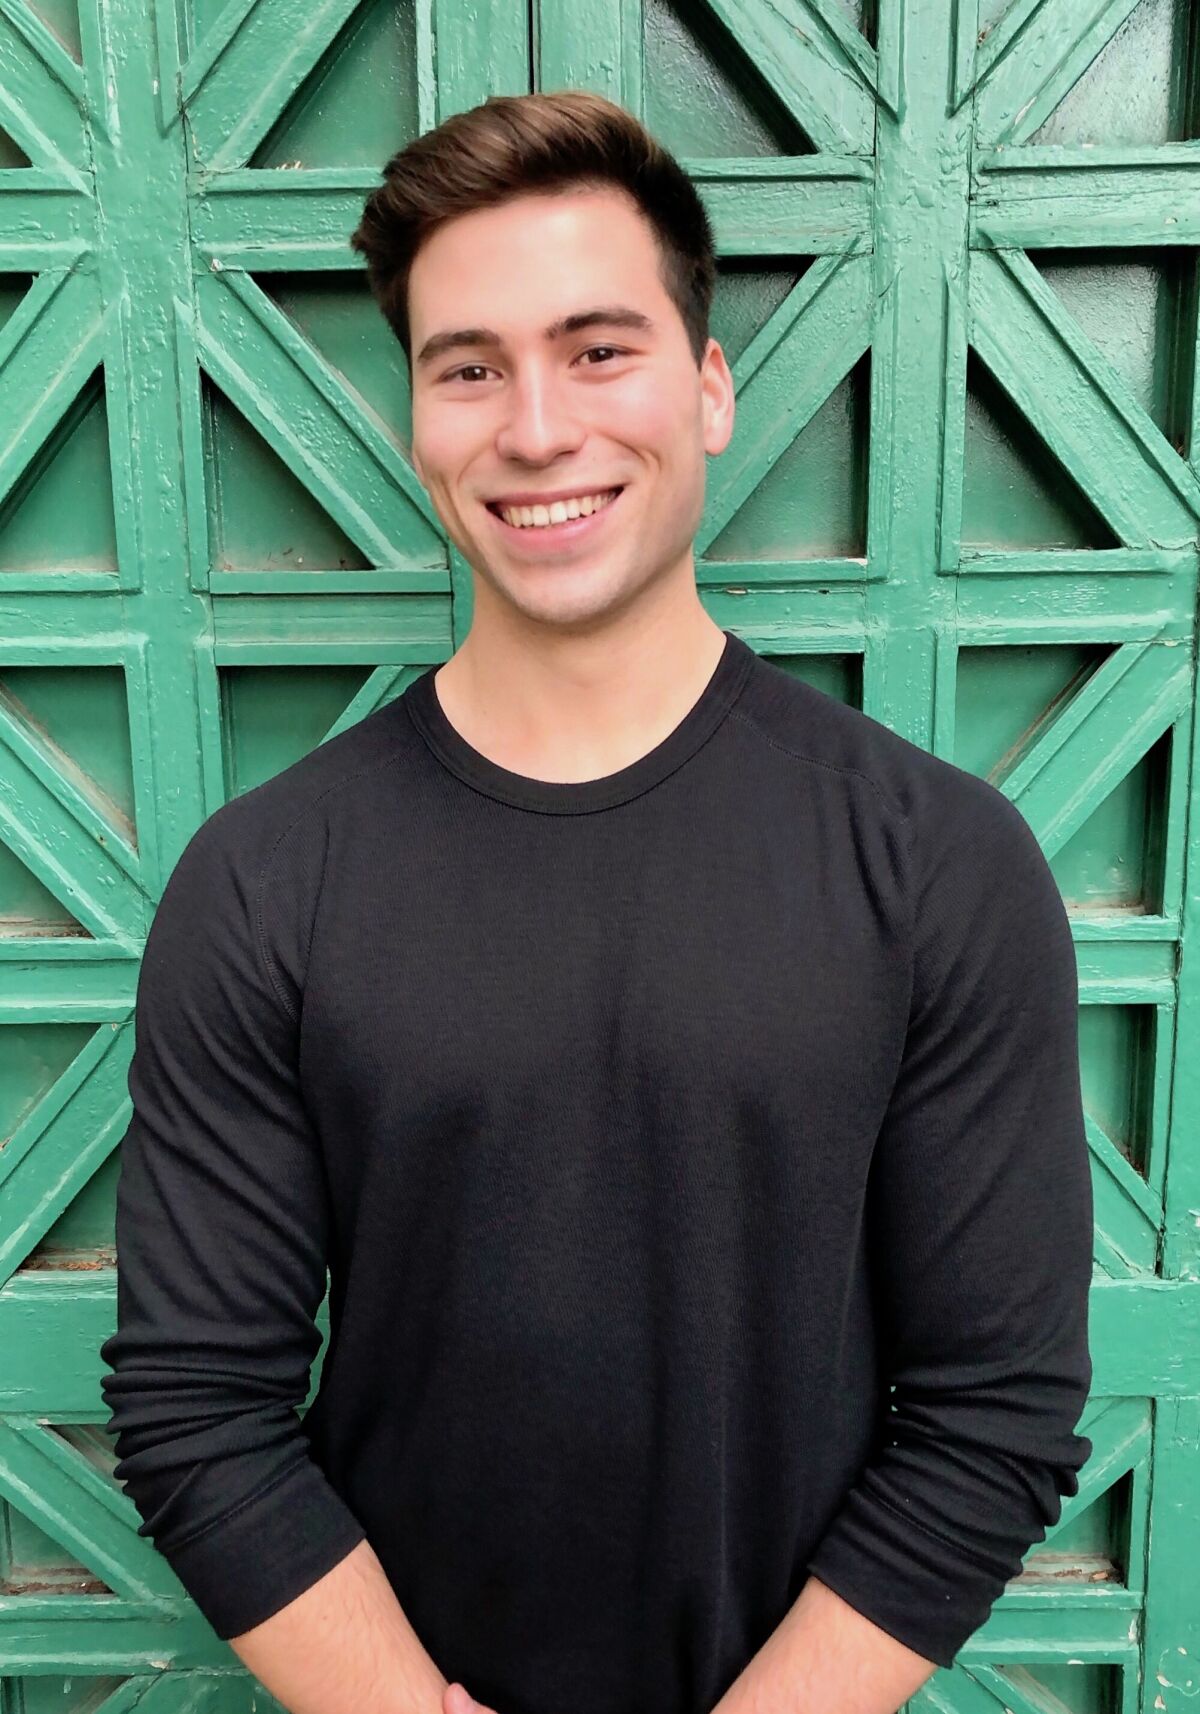 Jonathan Kopp, a 2018 graduate of La Jolla High School, has developed an app designed to help people quit vaping.